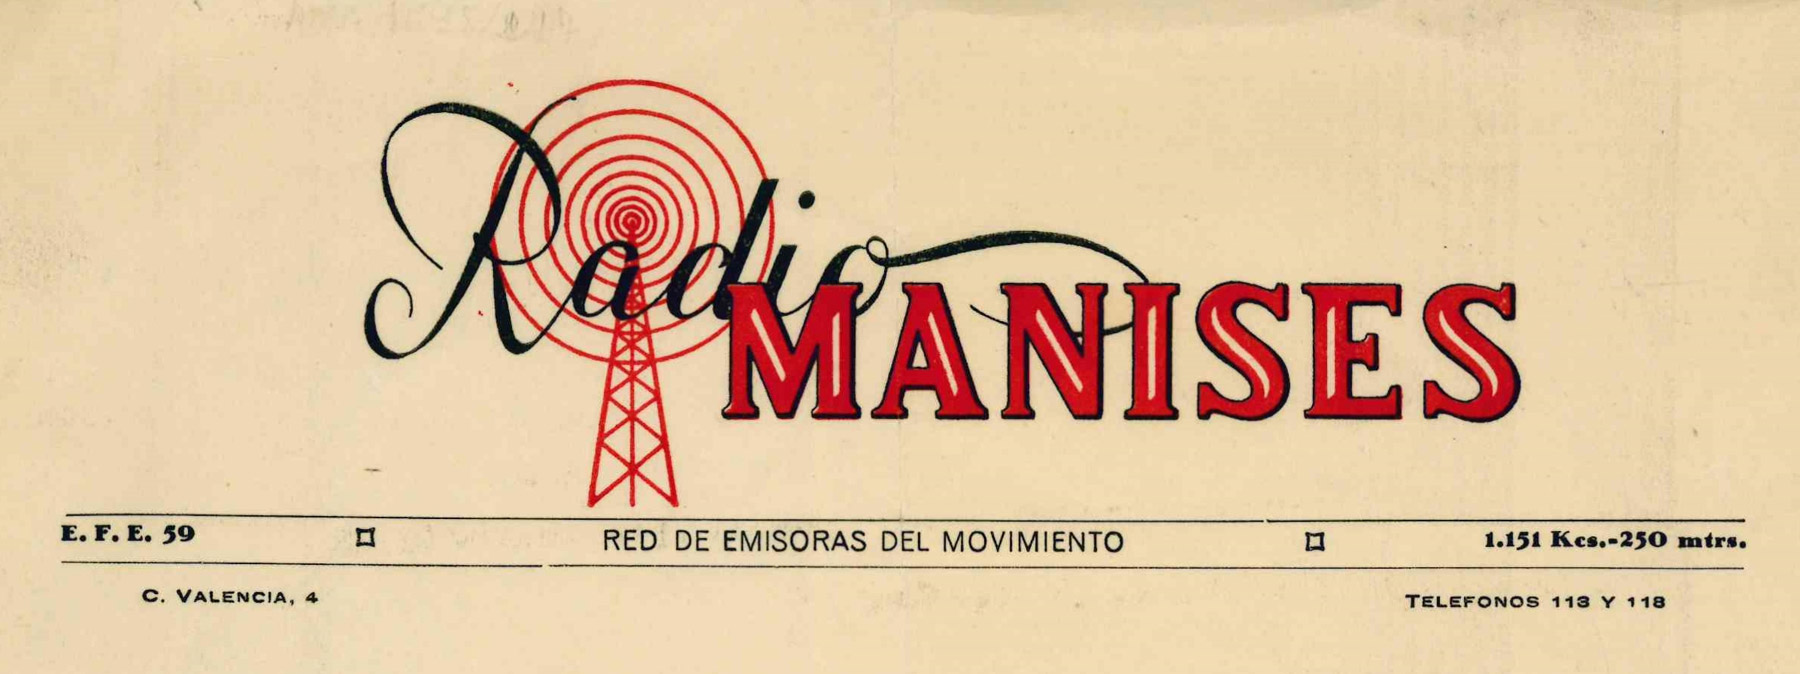 Radio Manises